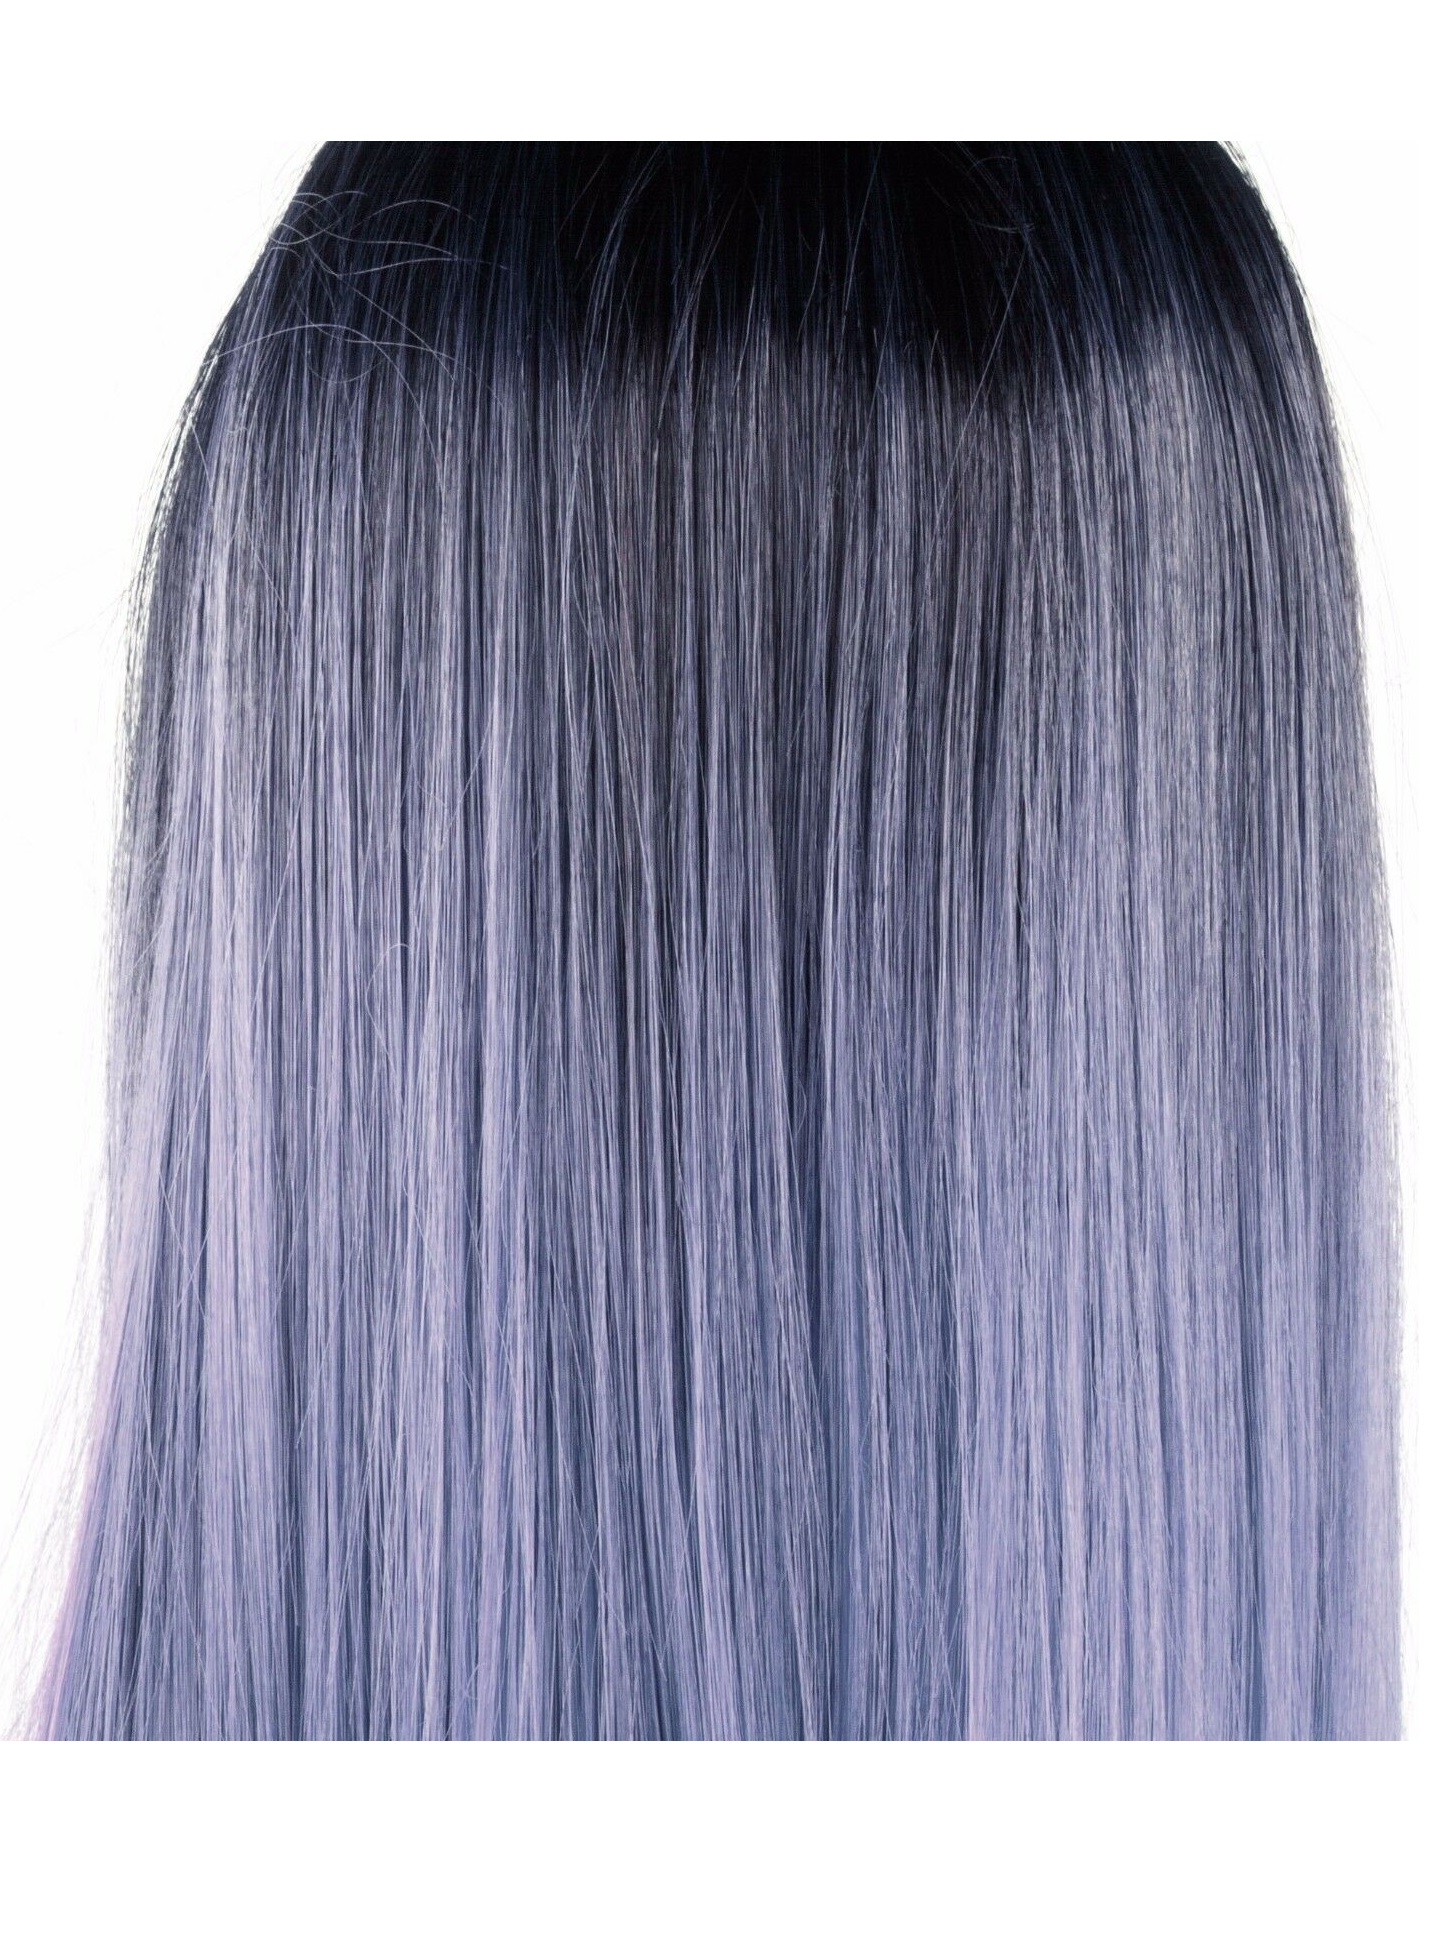 I&K Roxy Long Silky Straight Ladies Wig - Black/Lavender